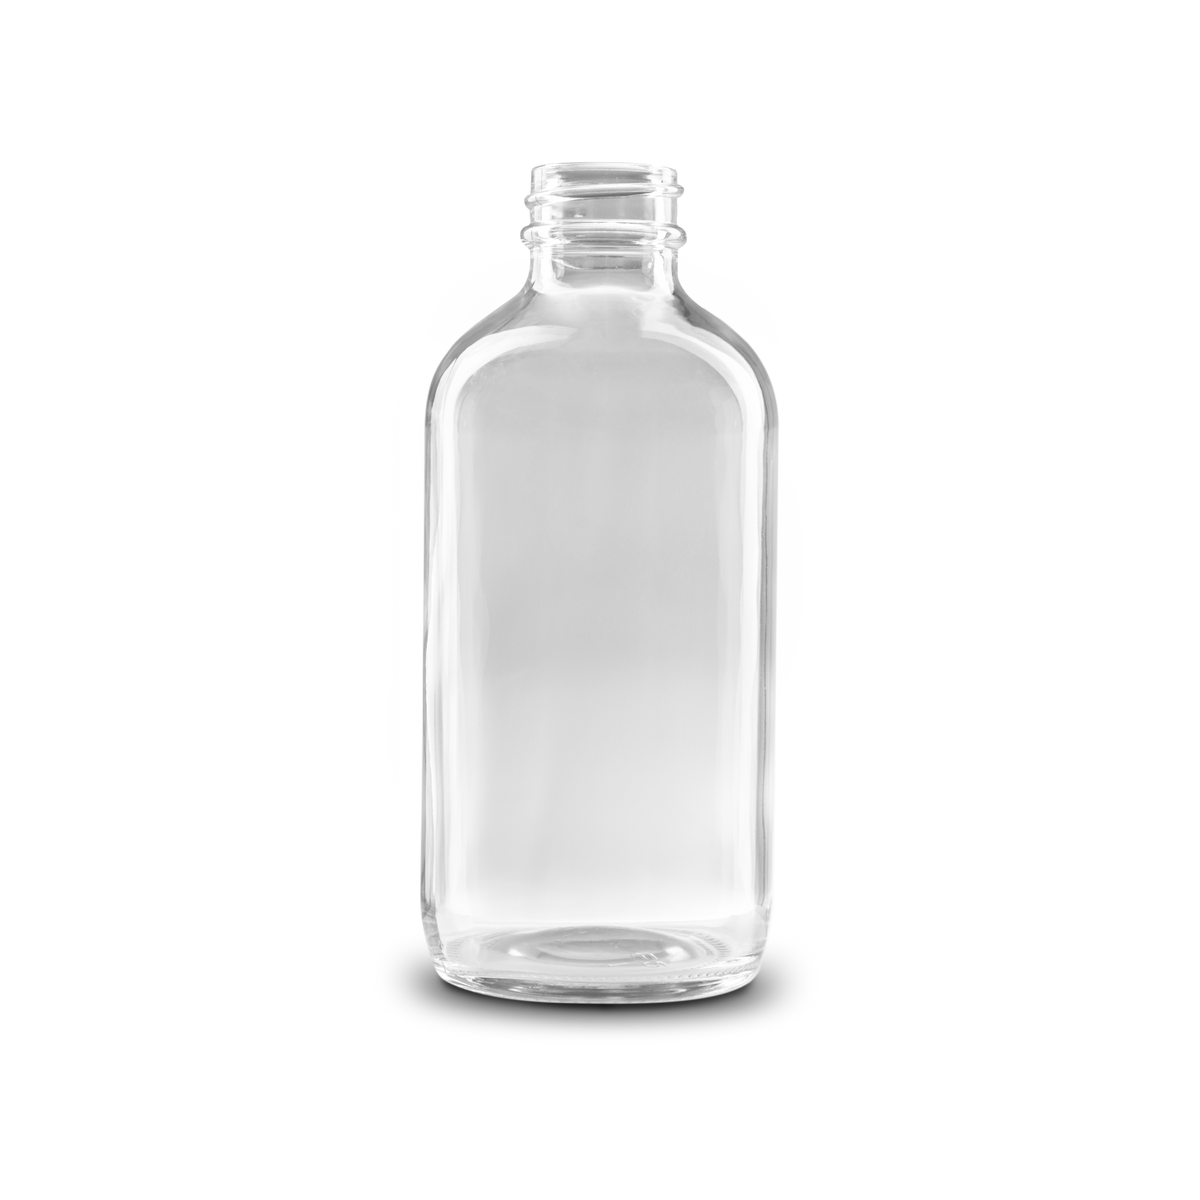 Clear Boston Round Glass Bottles - 8 oz